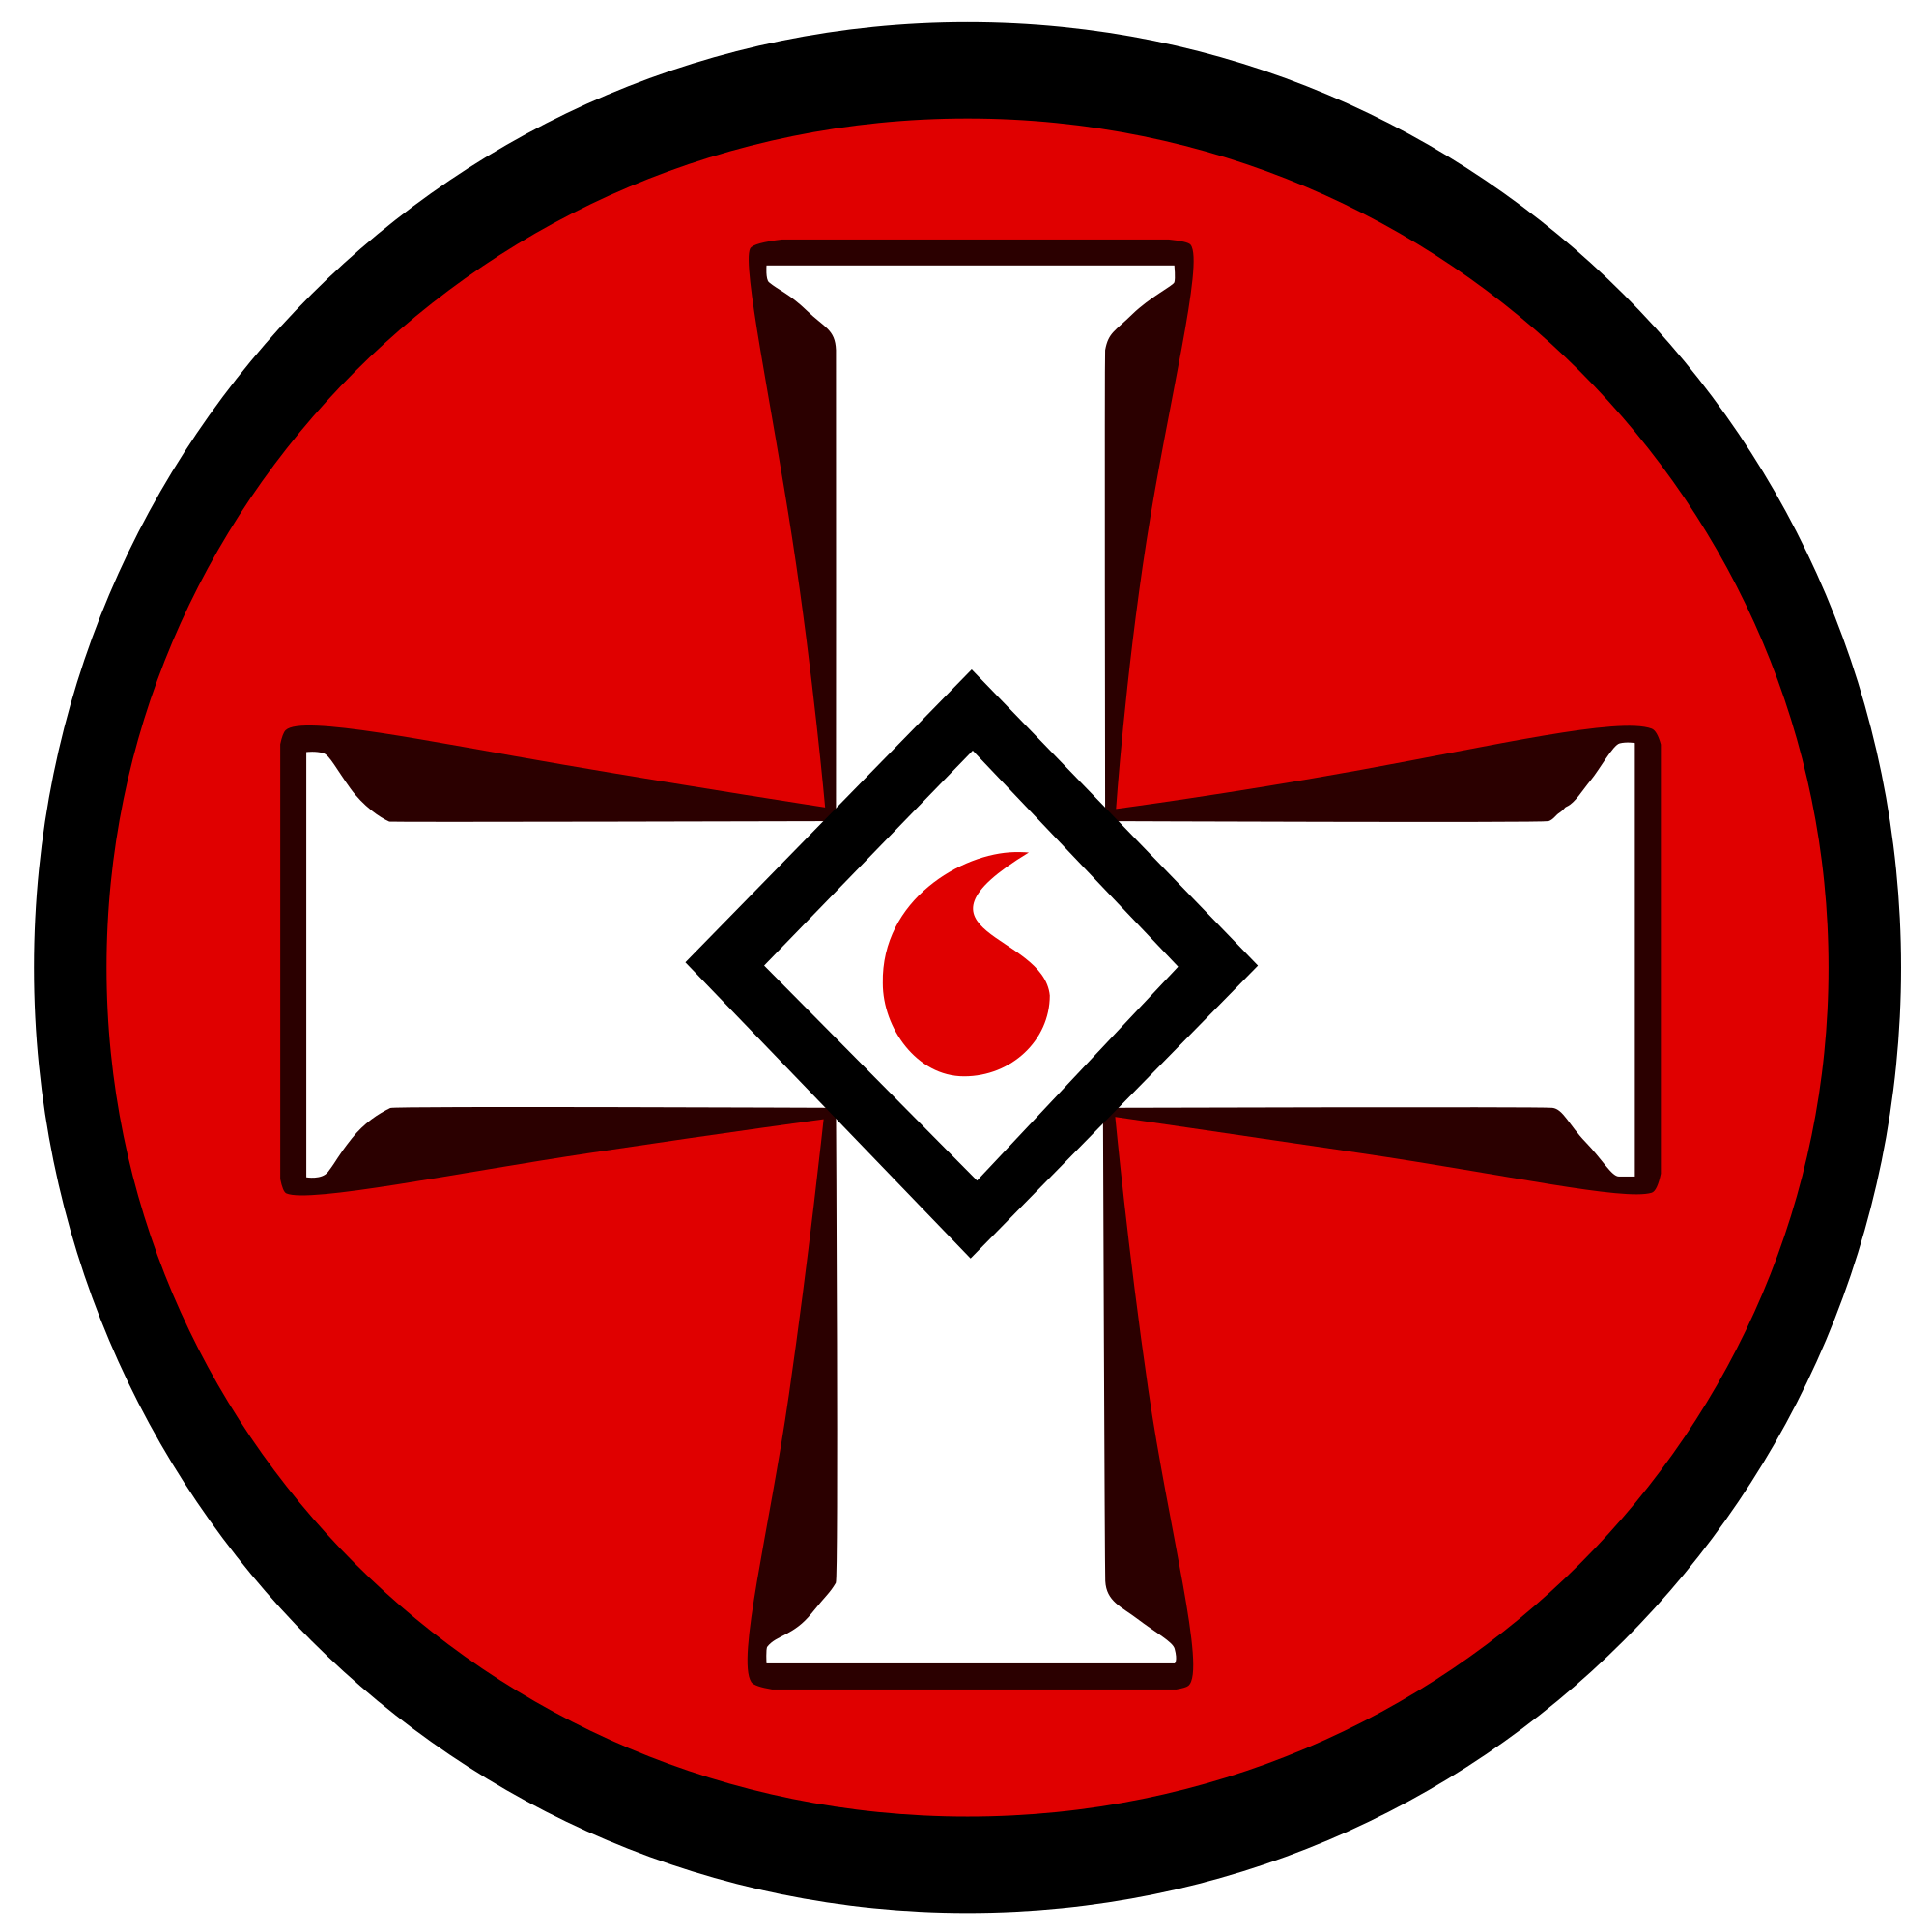 Il simbolo del Ku Klux Klan